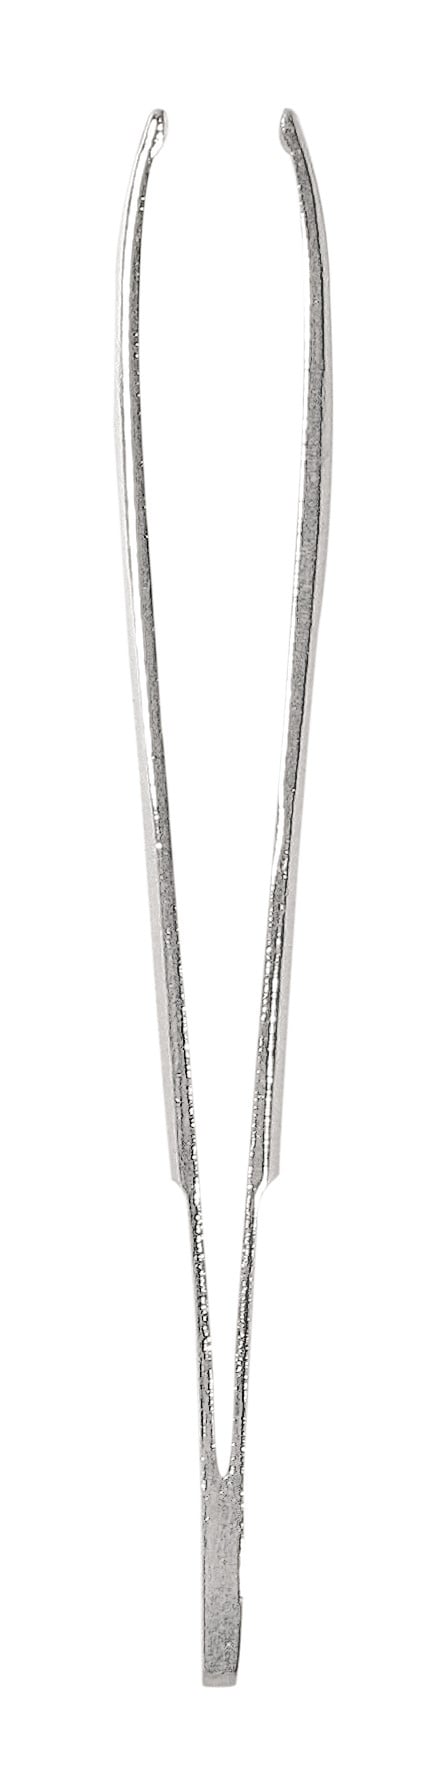 Пинцет узкий Titania Solingen 8 см (1071-A) - фото 2